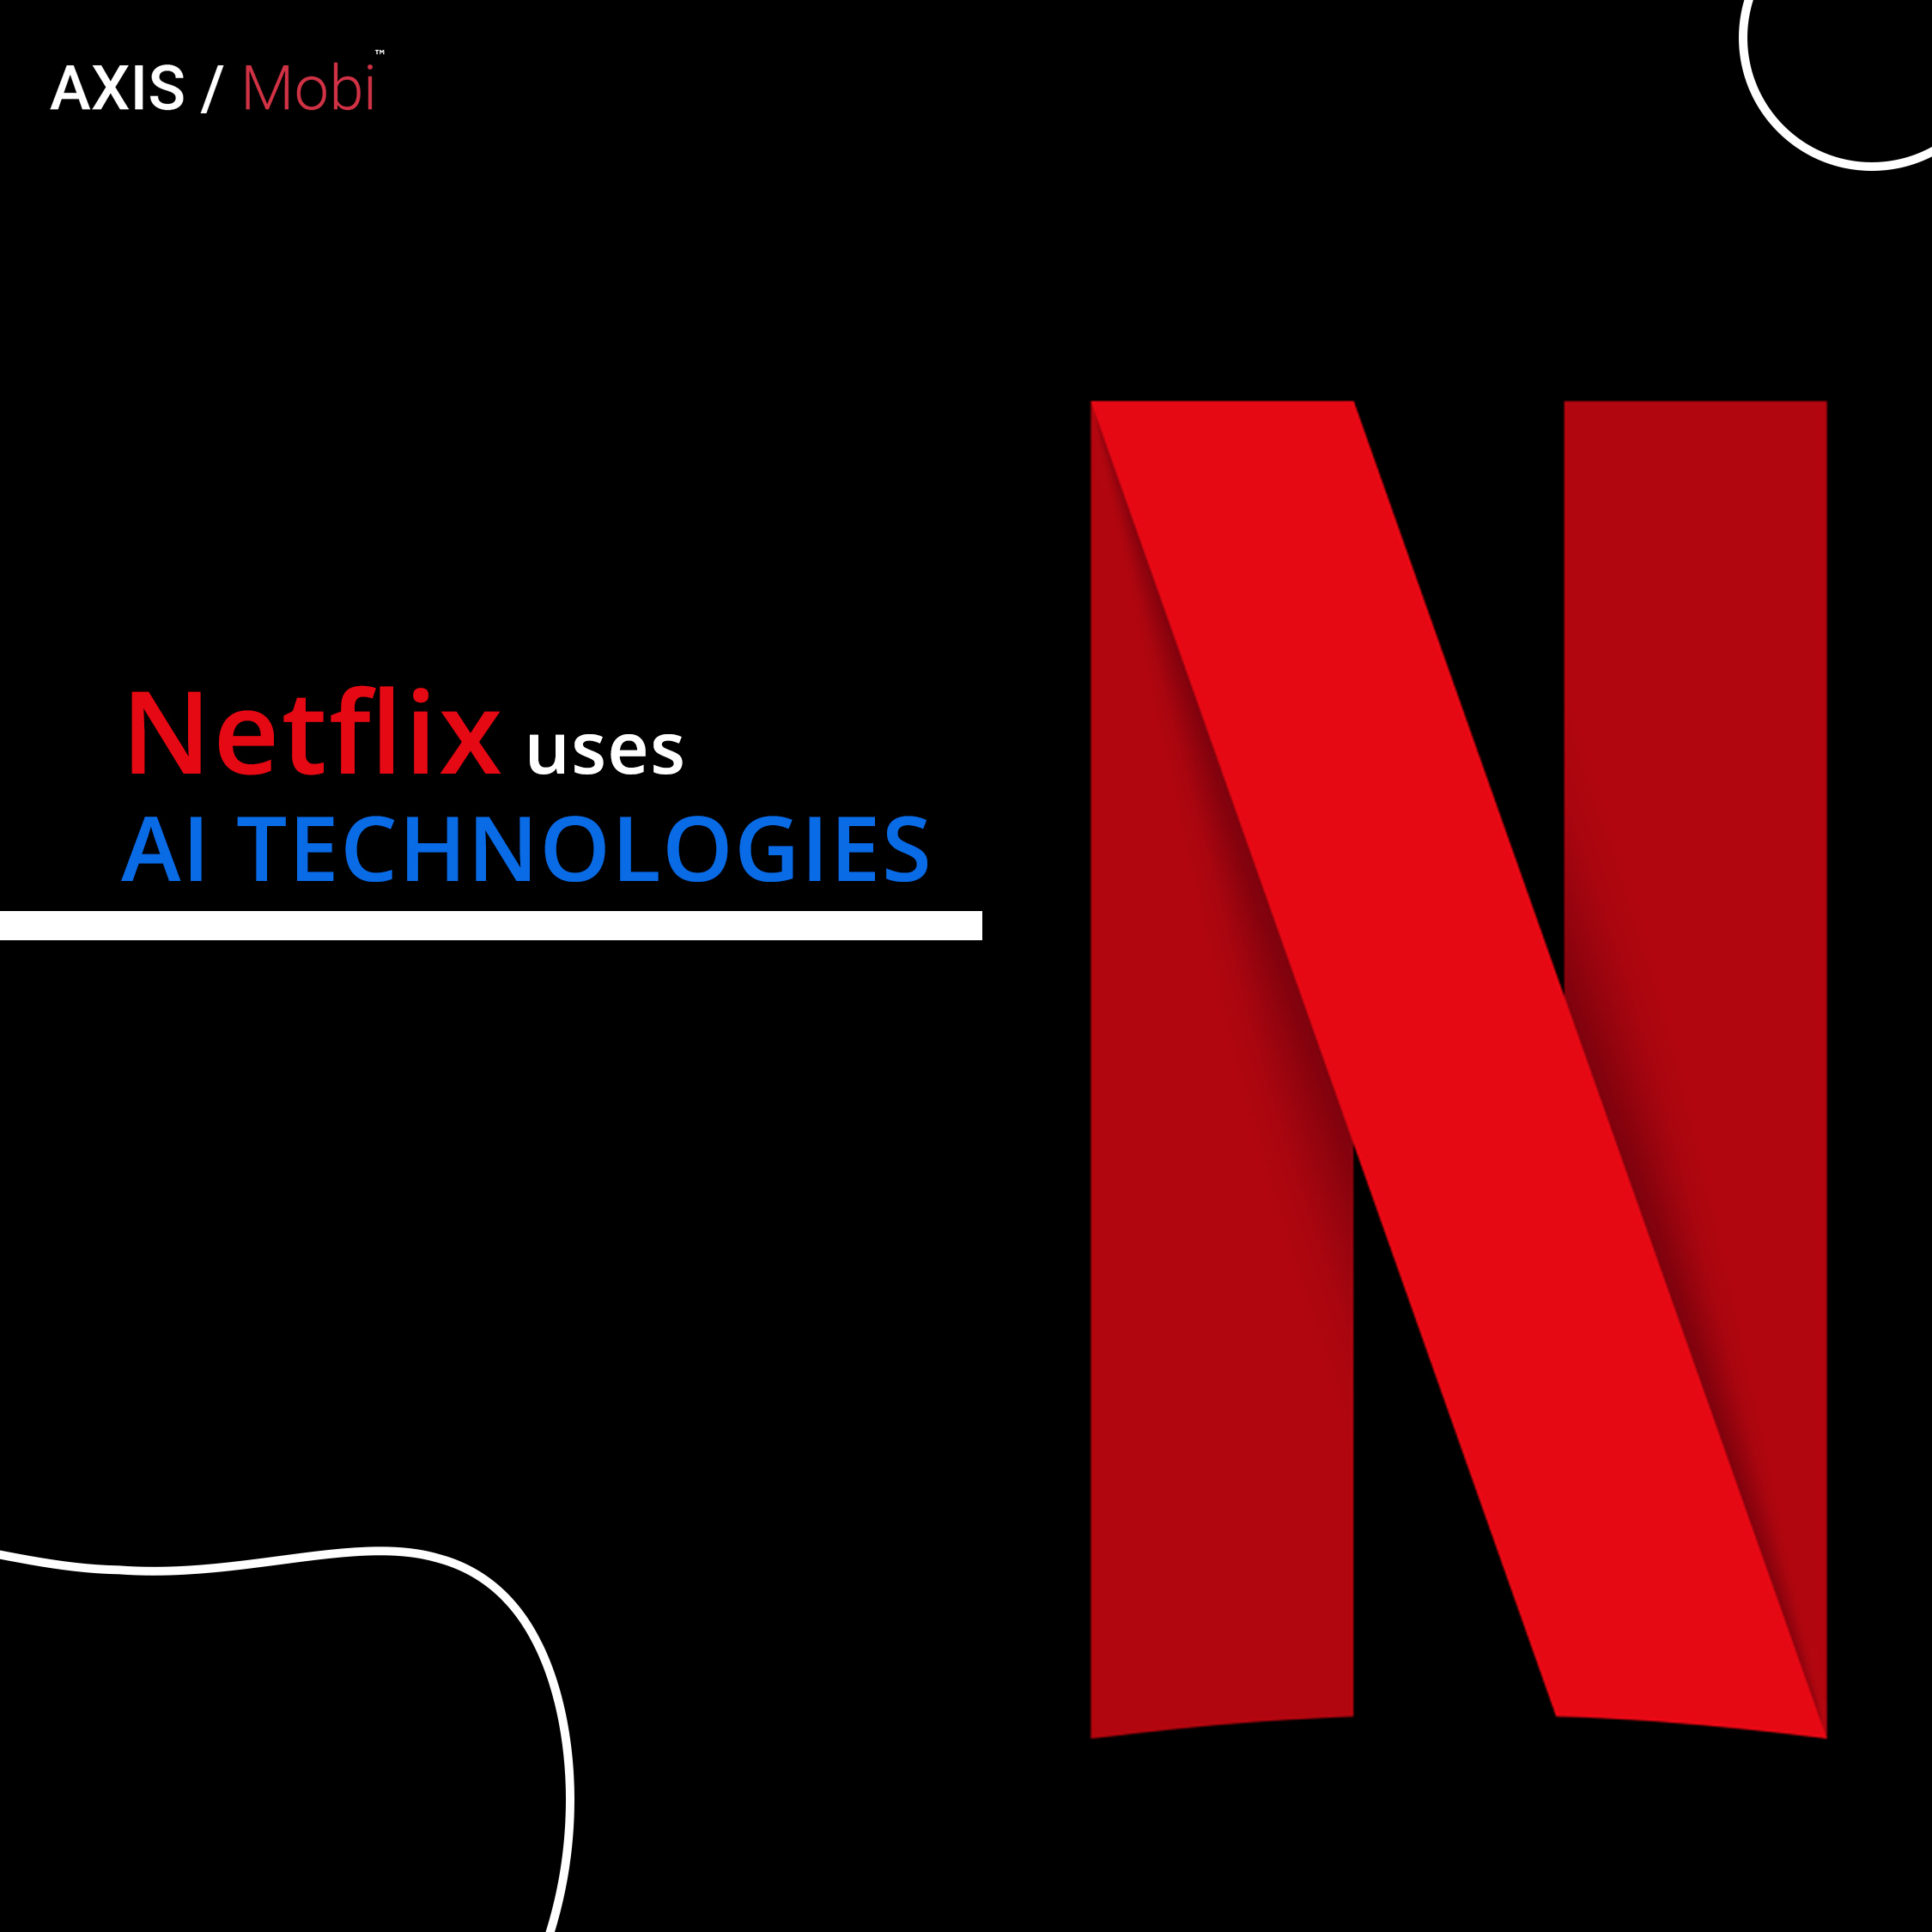 Netflix uses artificial intelligence technologies